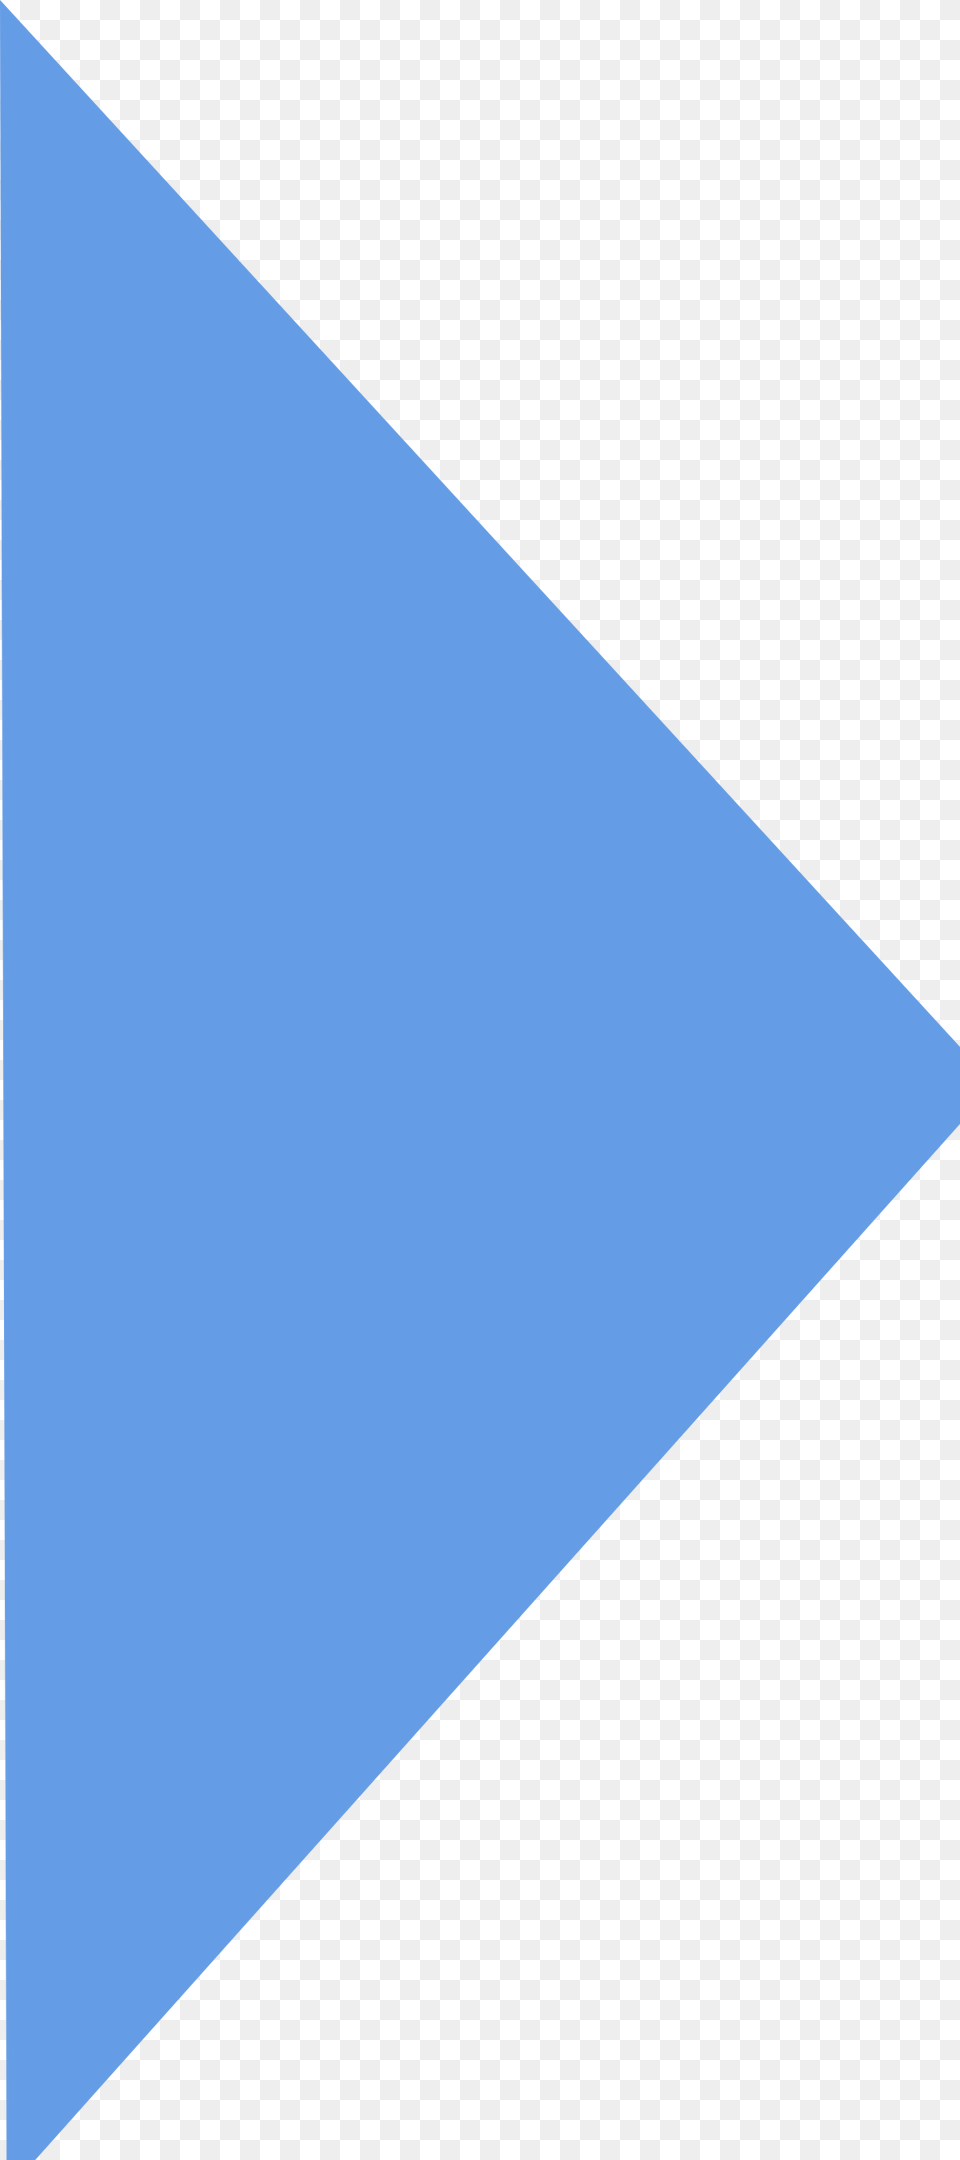 Flecha Azul Derecha, Triangle Png Image